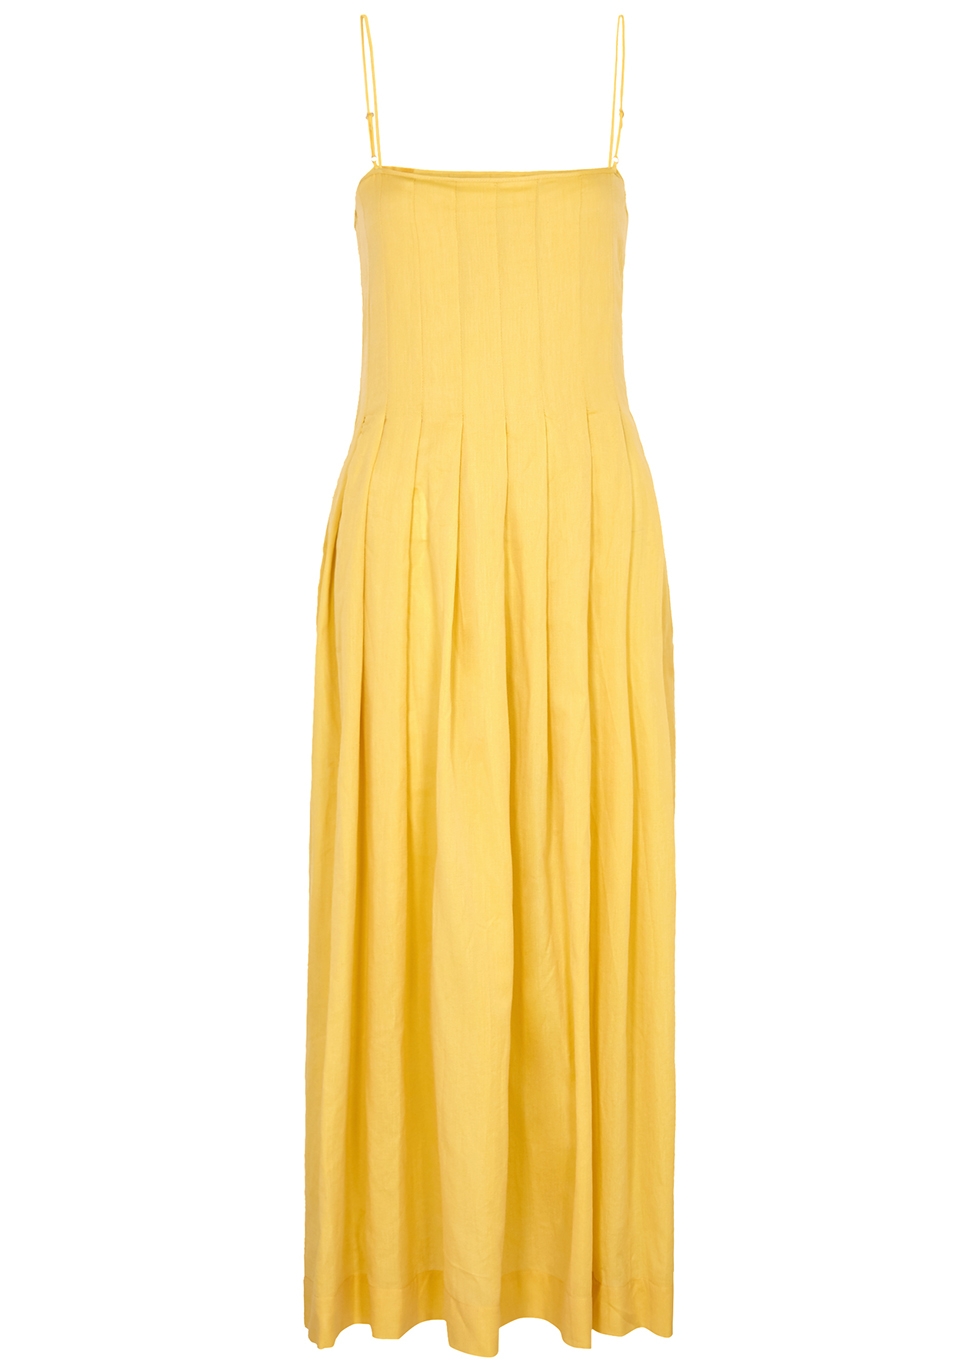 Three Graces Lucia yellow cotton maxi dress - Harvey Nichols